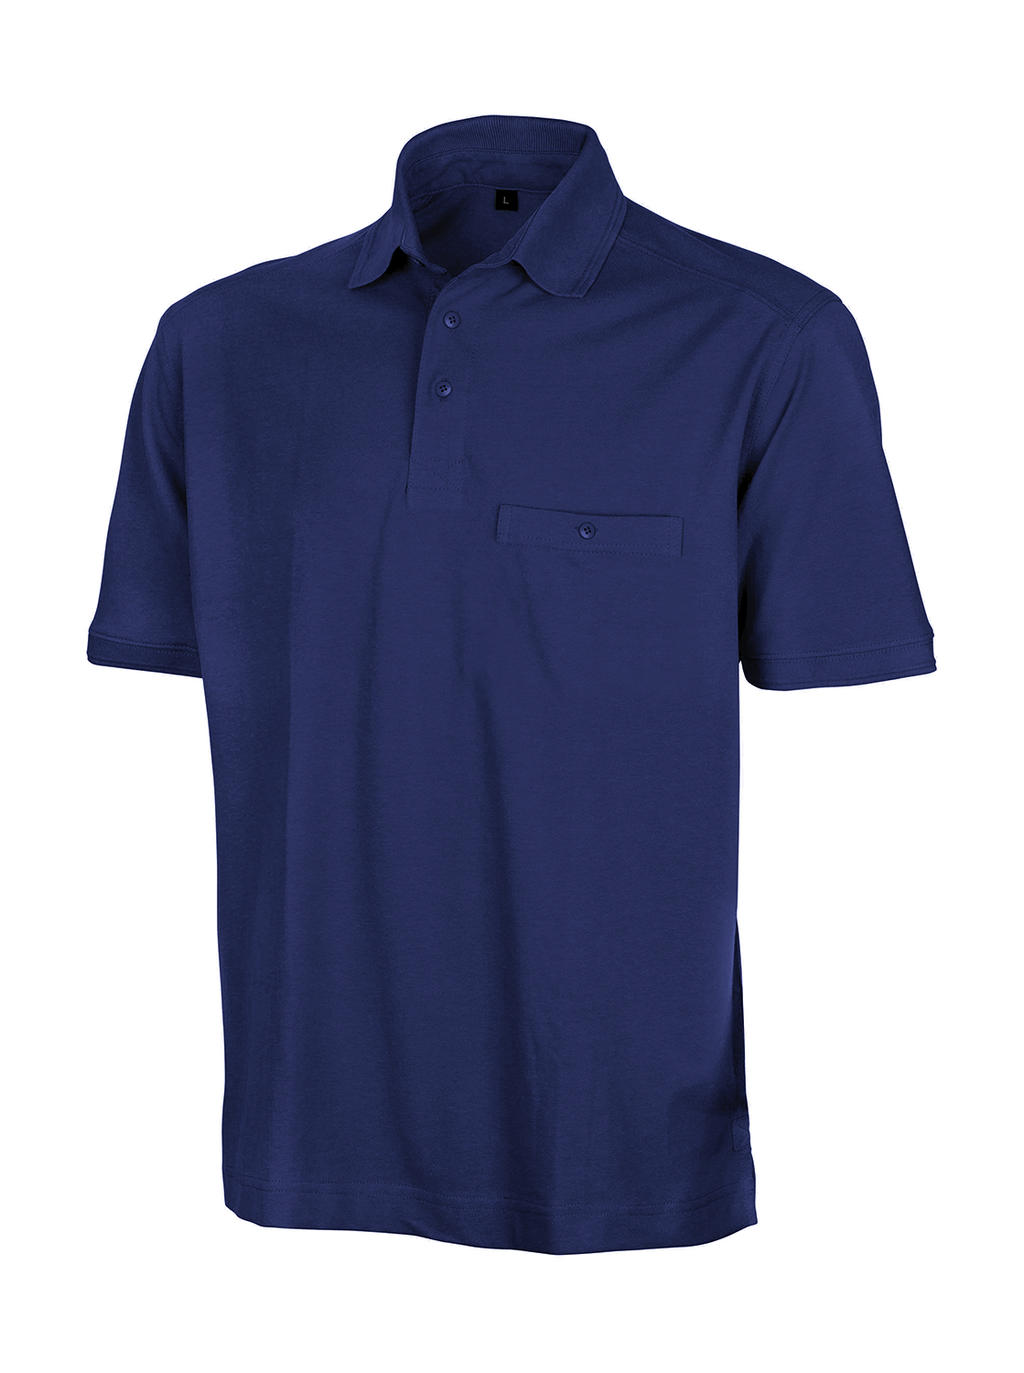  Apex Polo Shirt in Farbe Royal